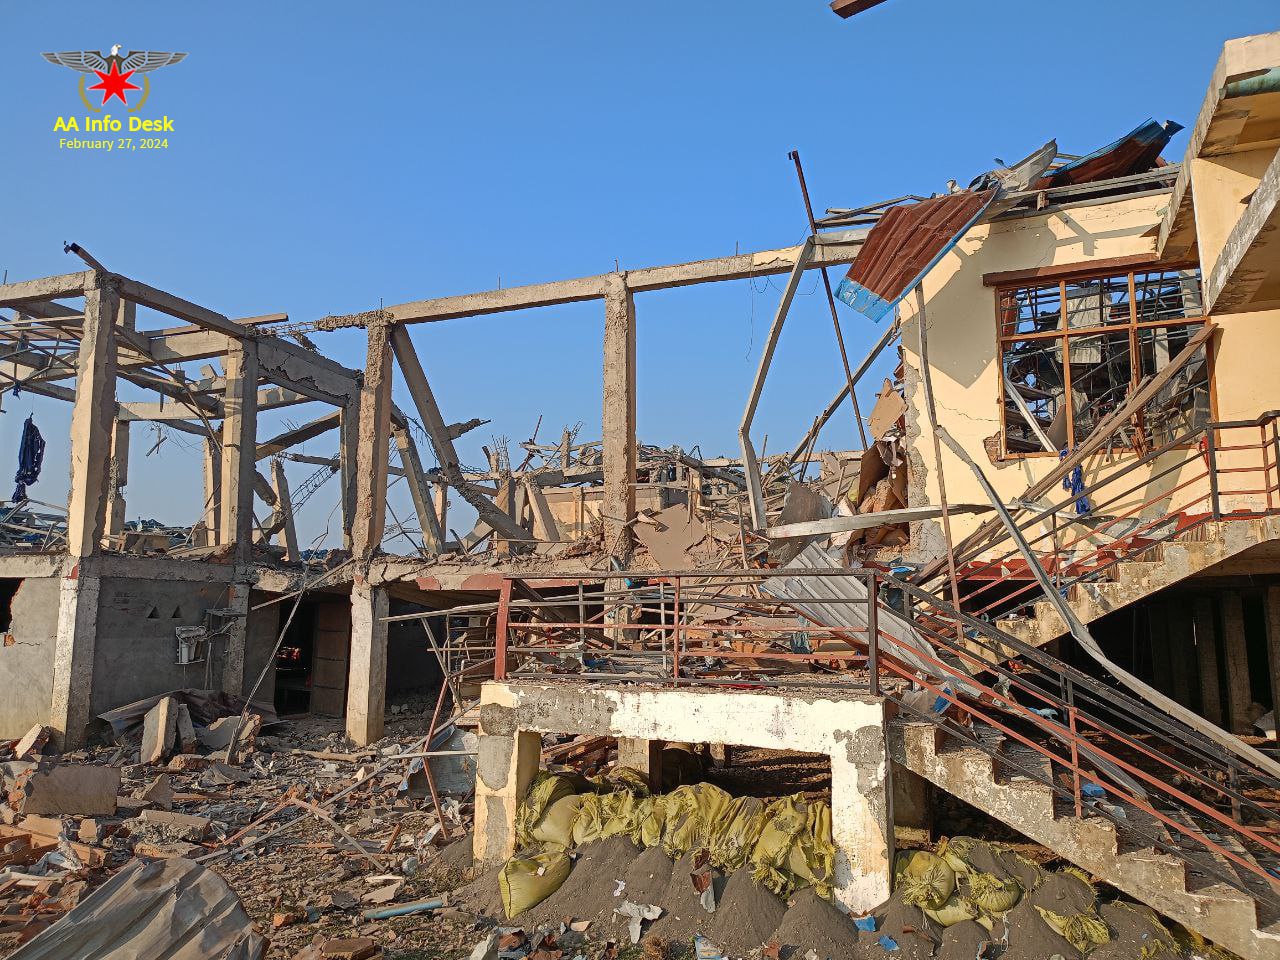 Min Phuu cottage hospital in Minbya Township was damaged by a junta air raid in February 2024. 